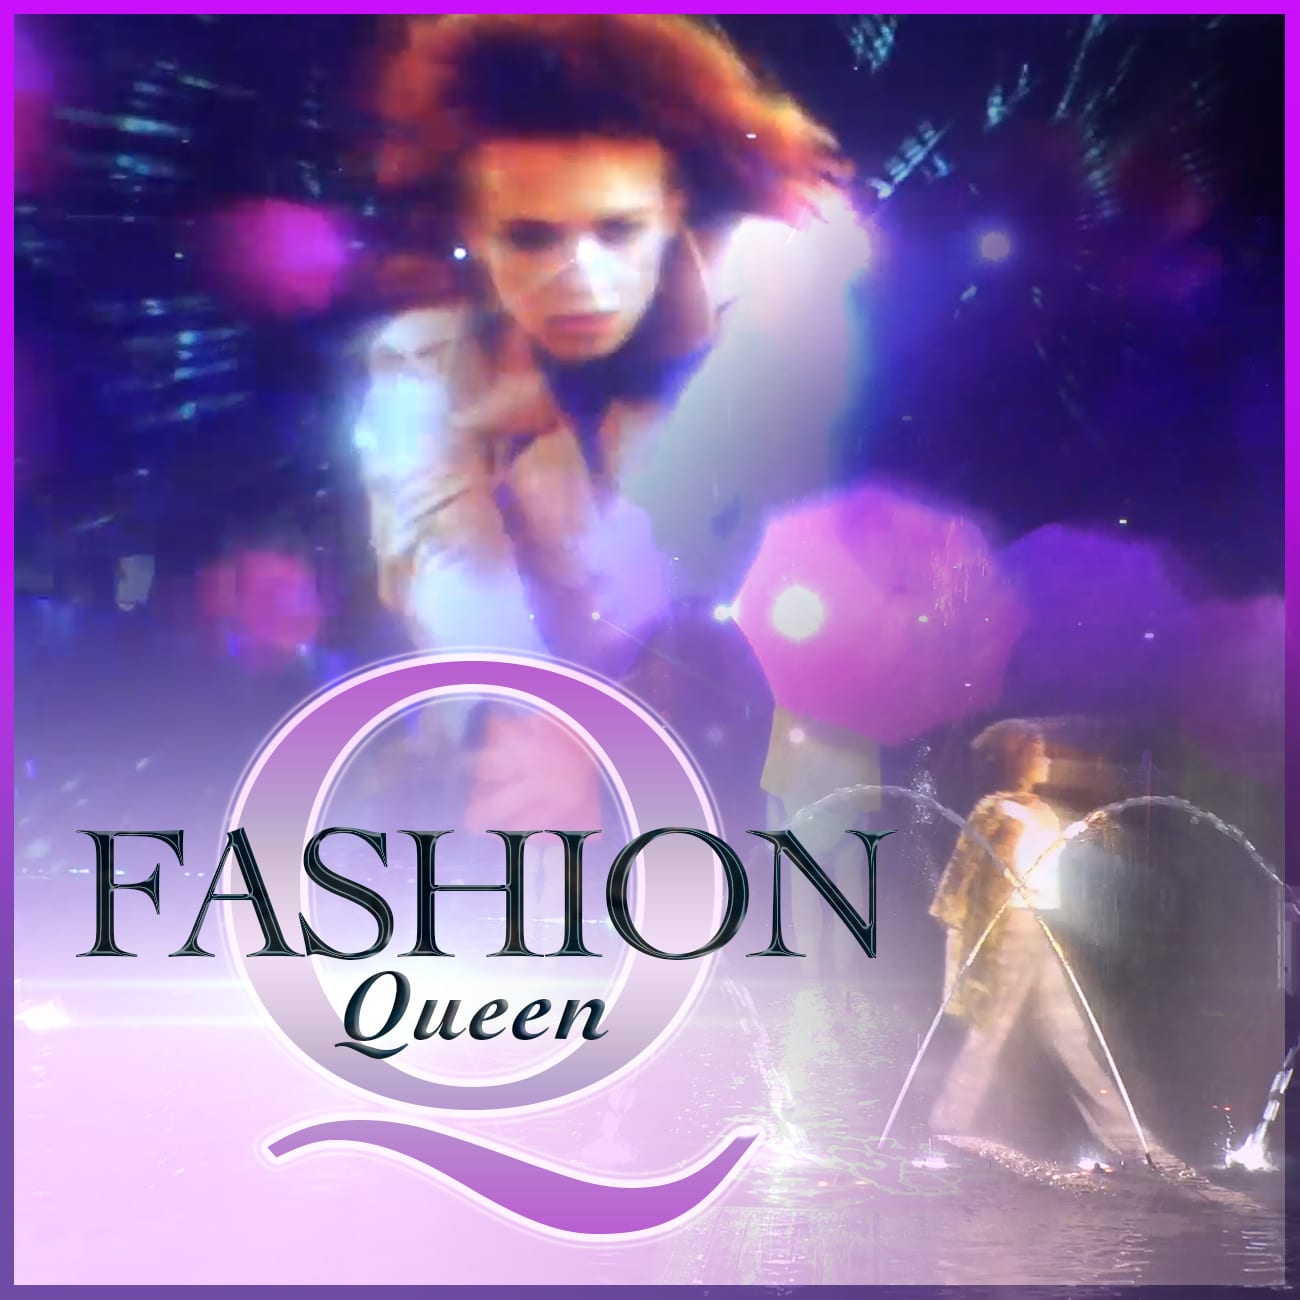 THE VILLAGE - Fashion Queen - Waterscreen Show